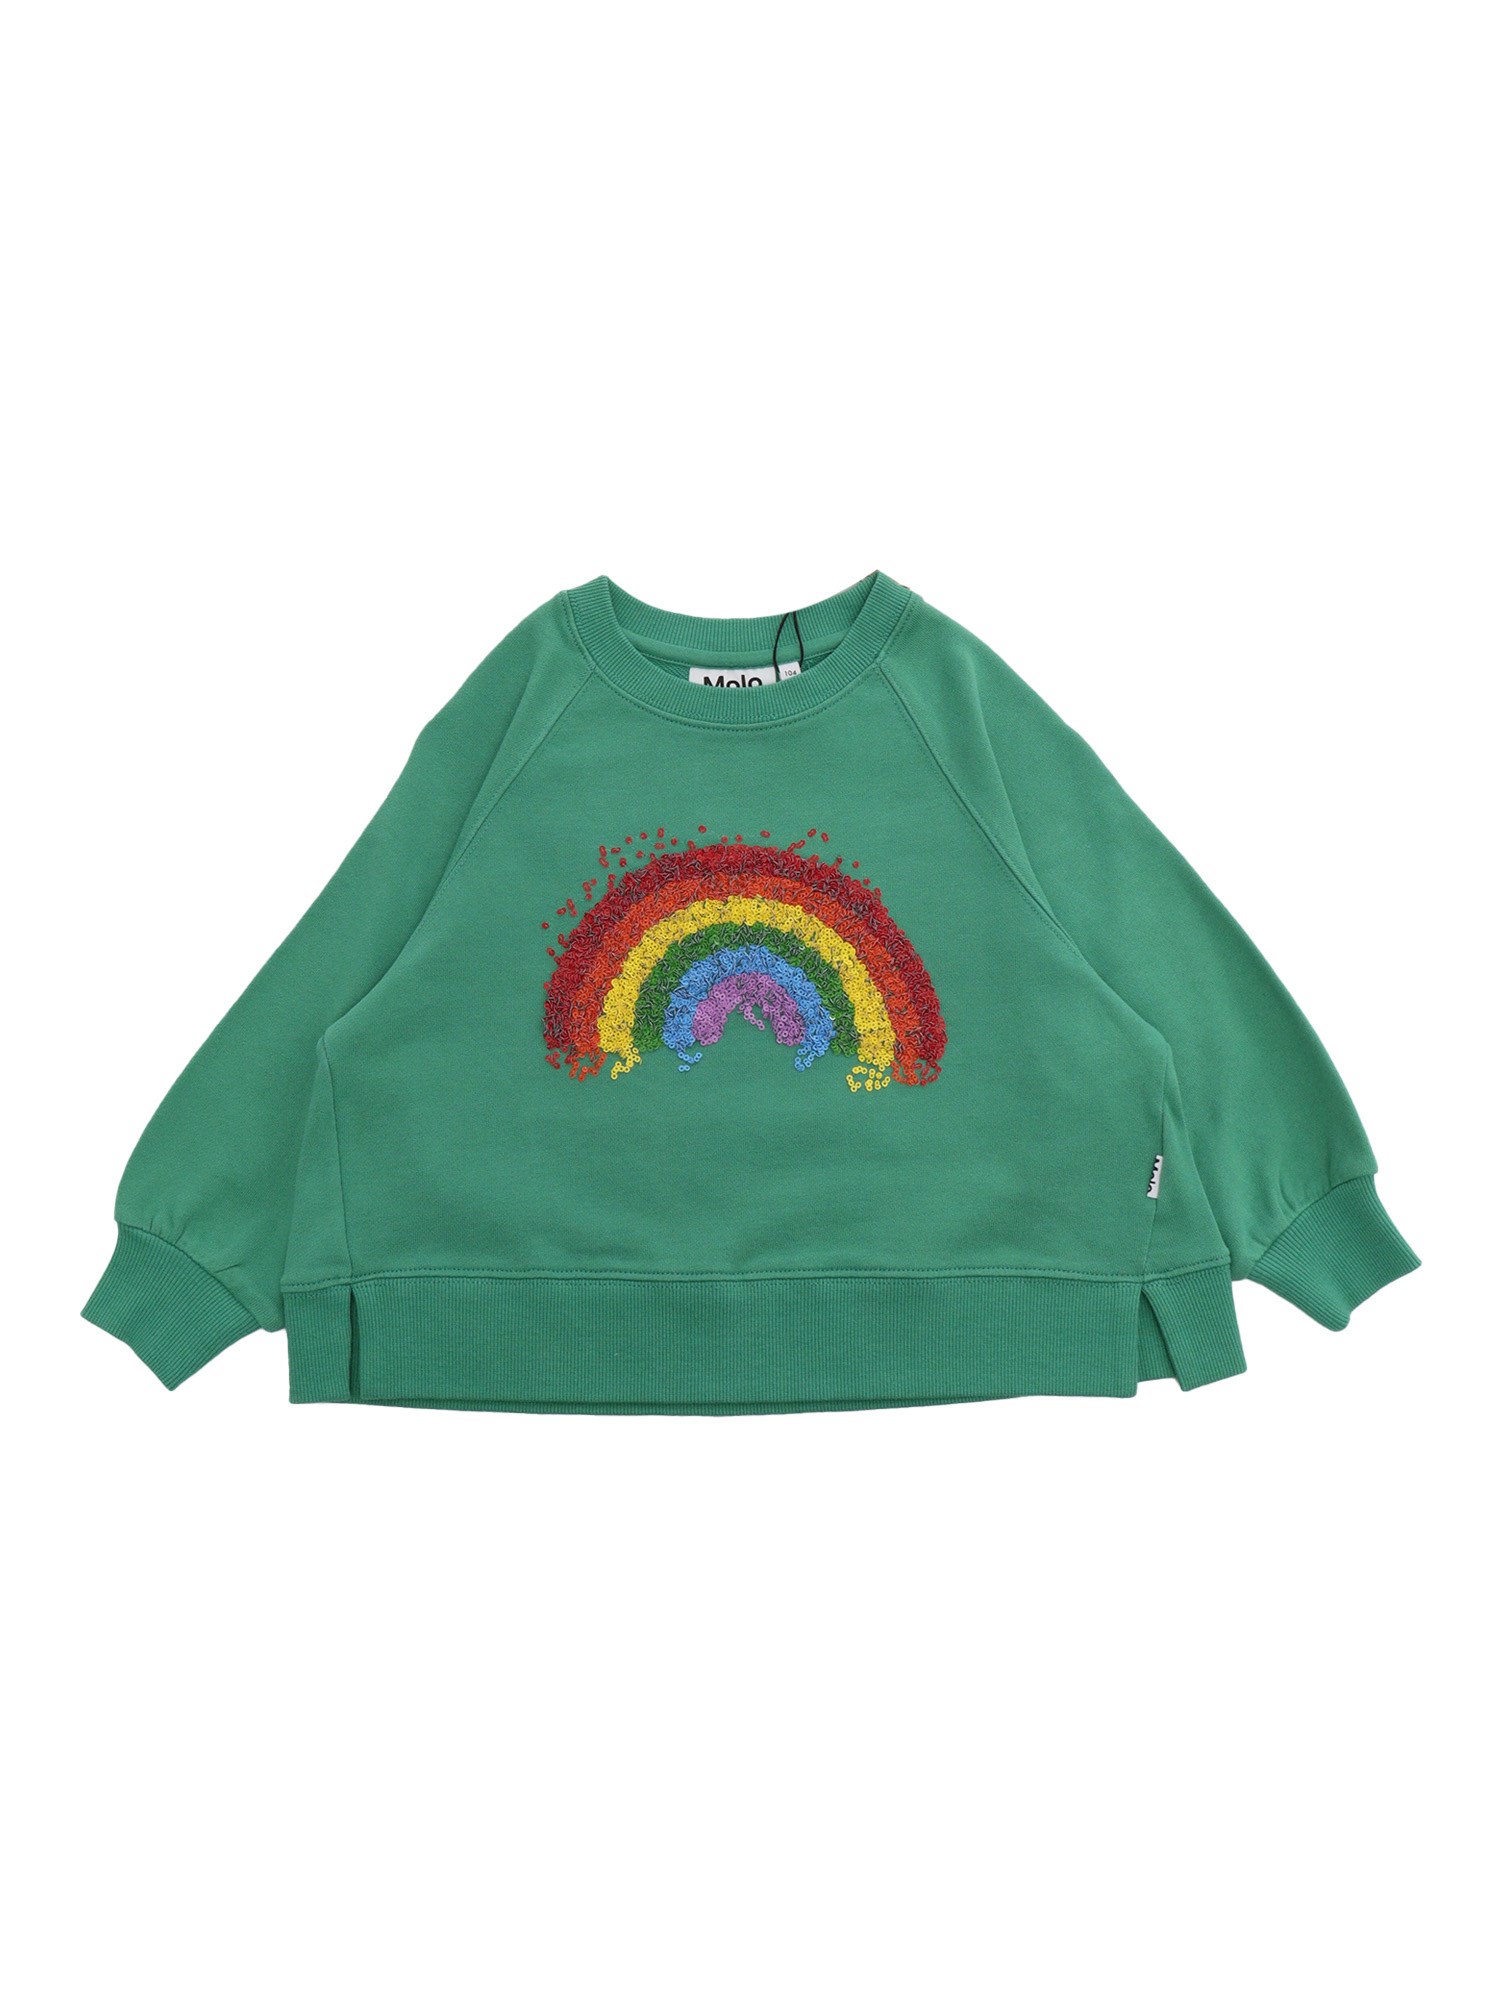 Molo Green Sweatshirt